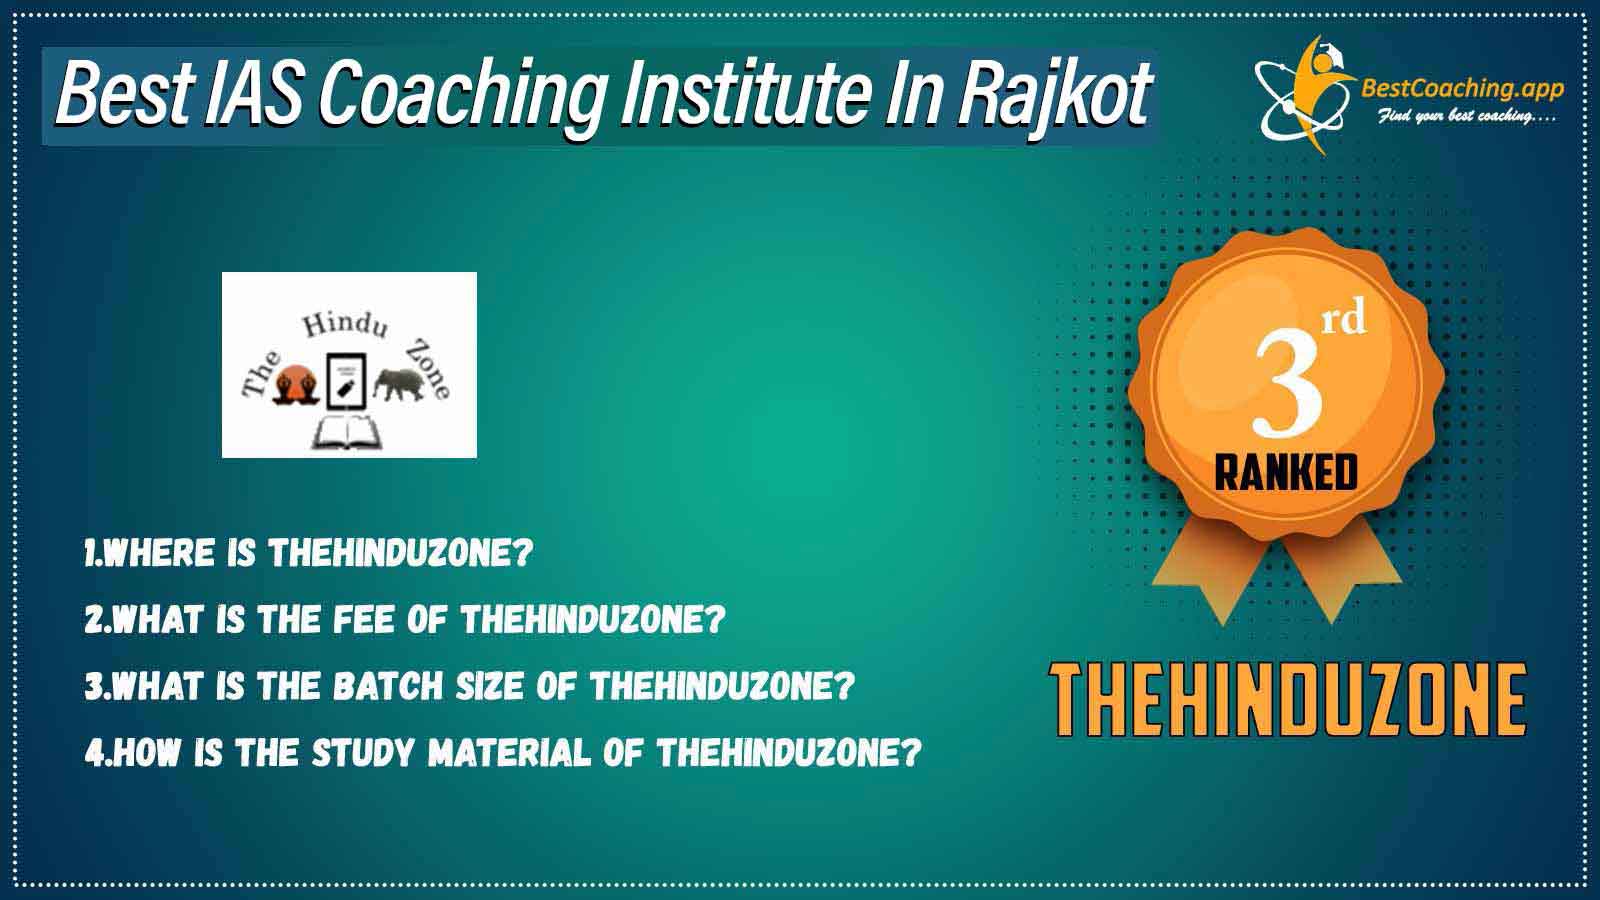 Rank 3 Best IAS Coaching in Rajkot